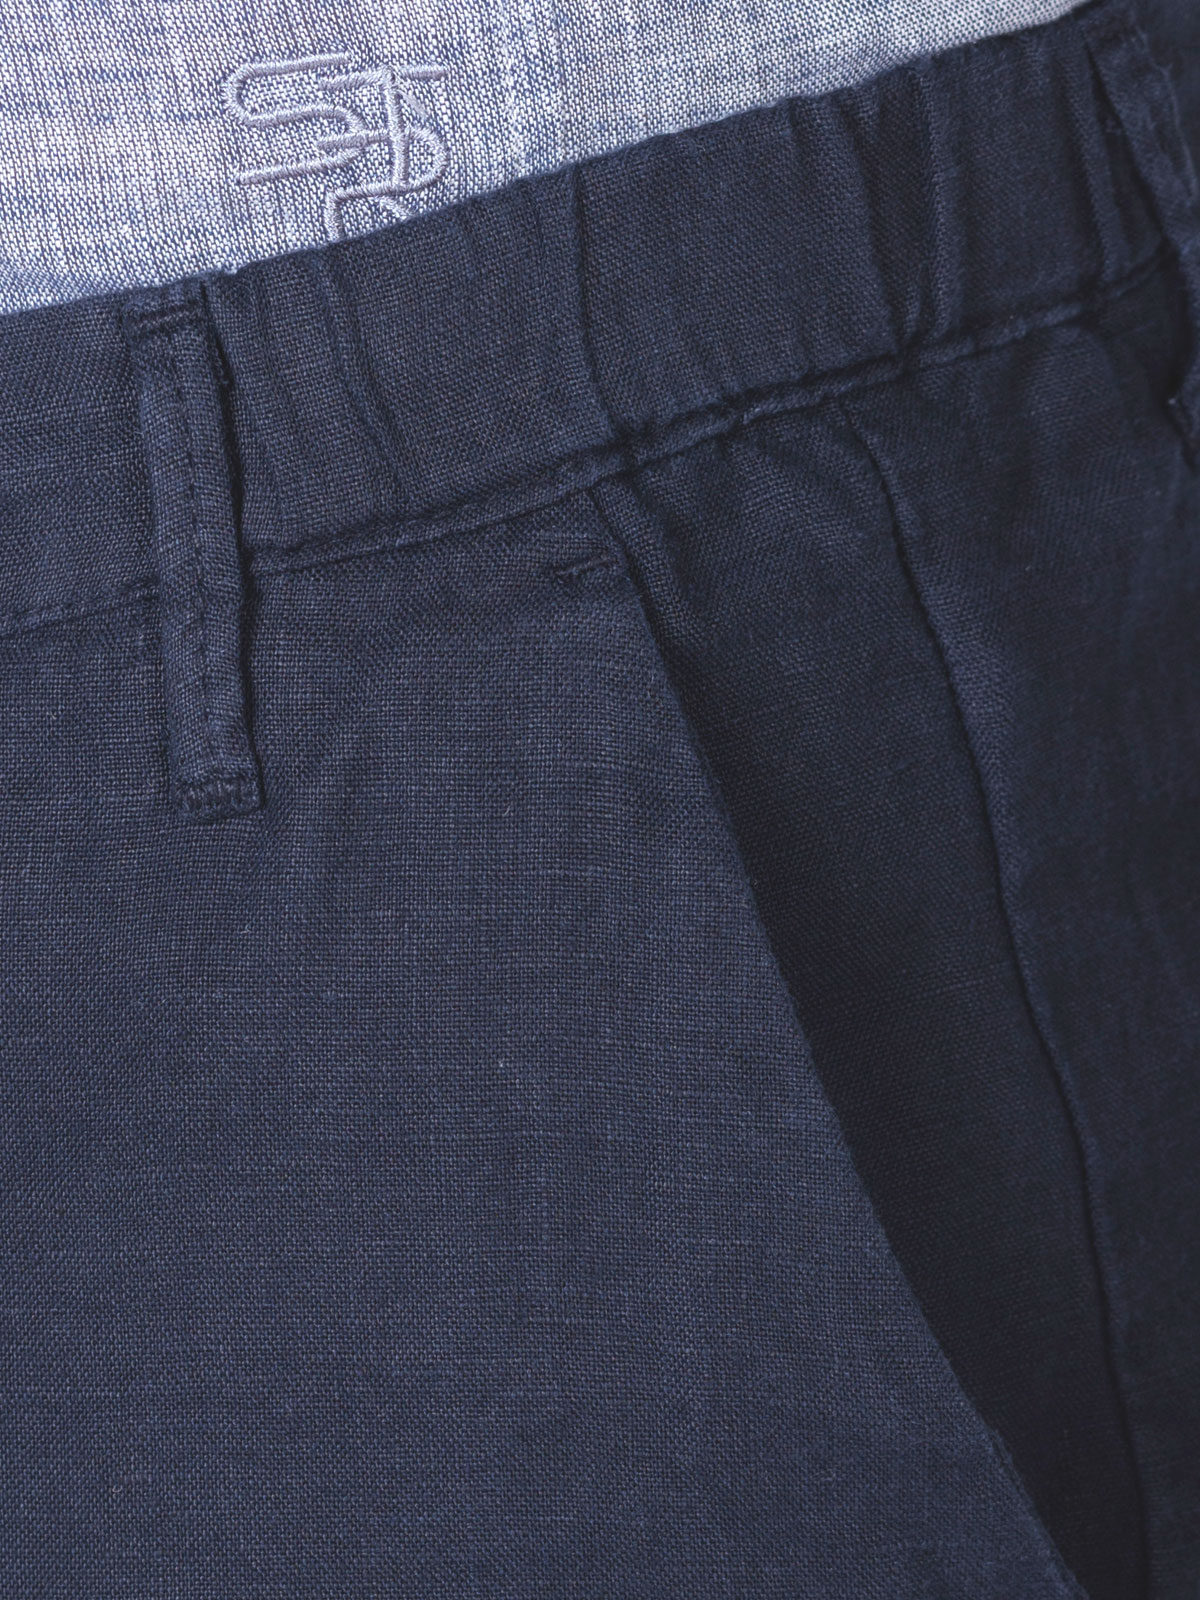 Linen pants in dark blue - 60291 € 66.37 img3